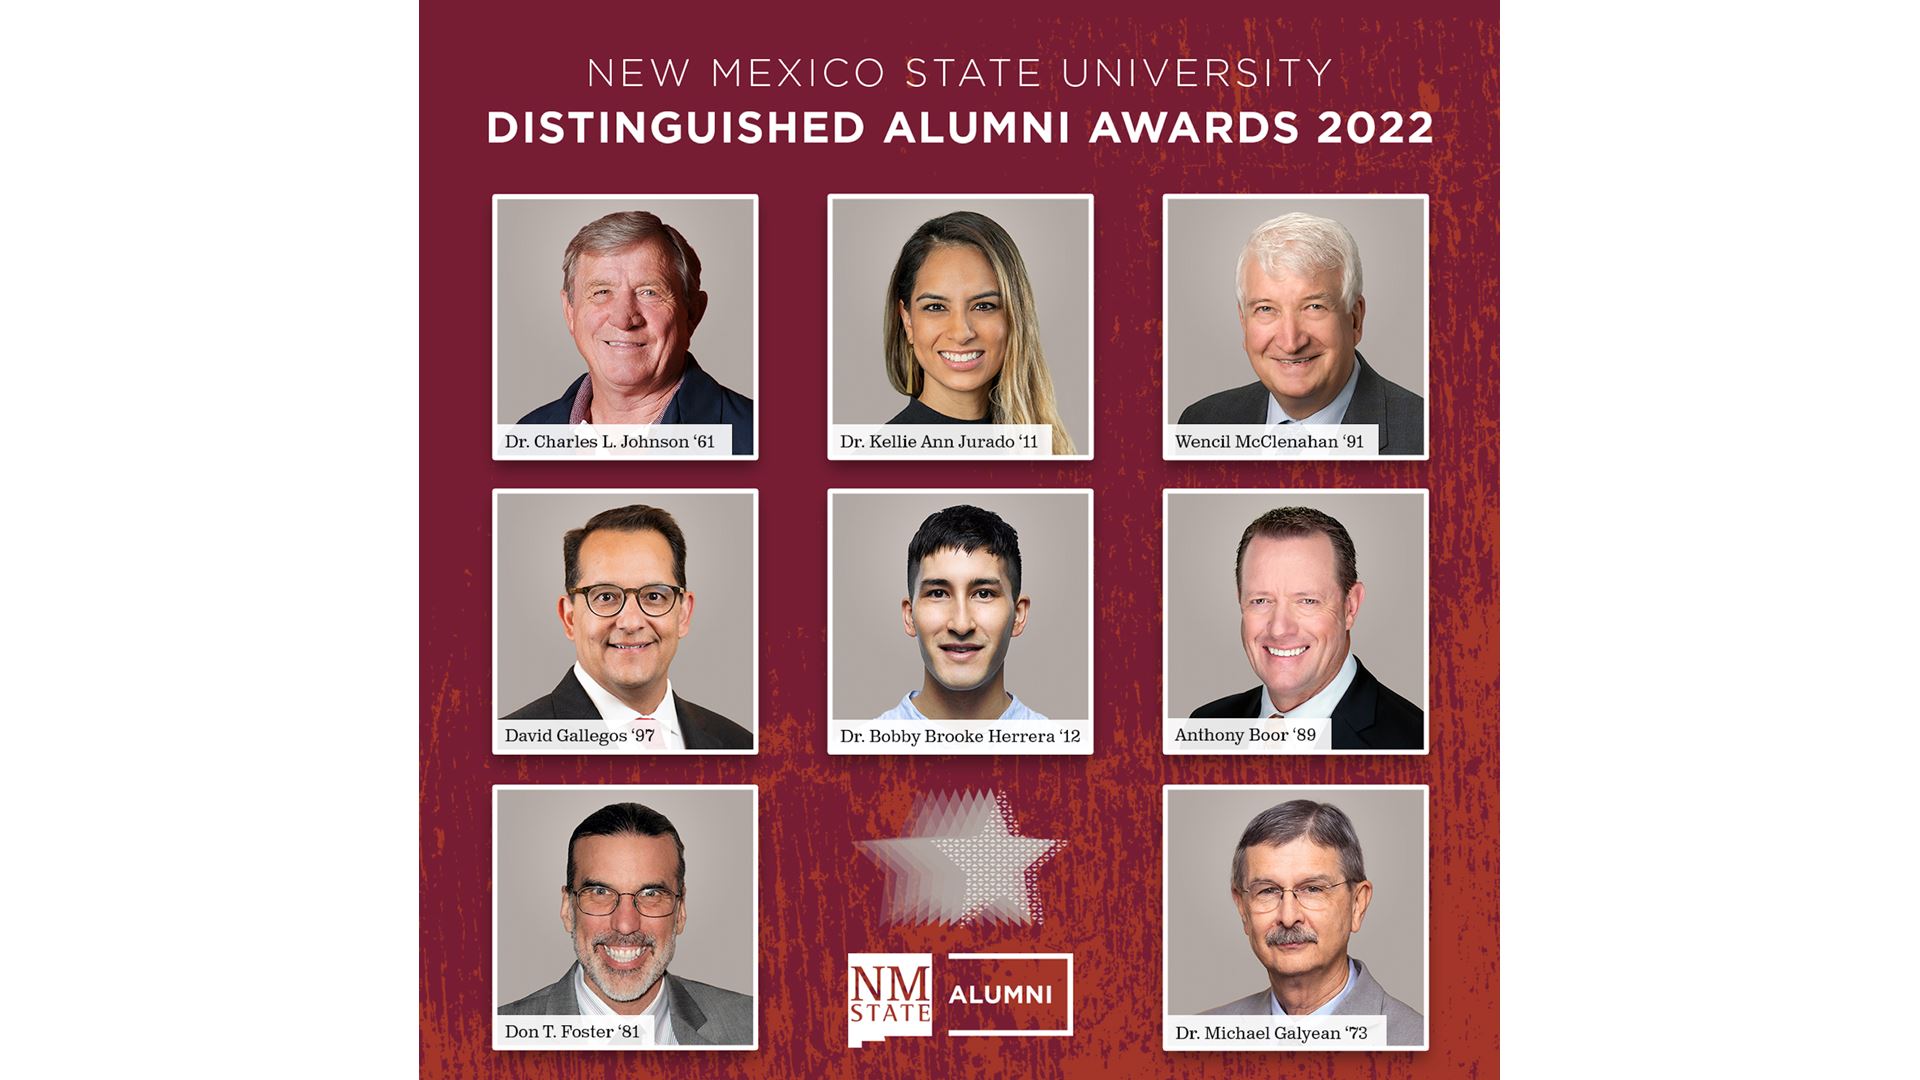 NMSU's Distinguished Alumni Awards recognize brilliance, determination and compassion